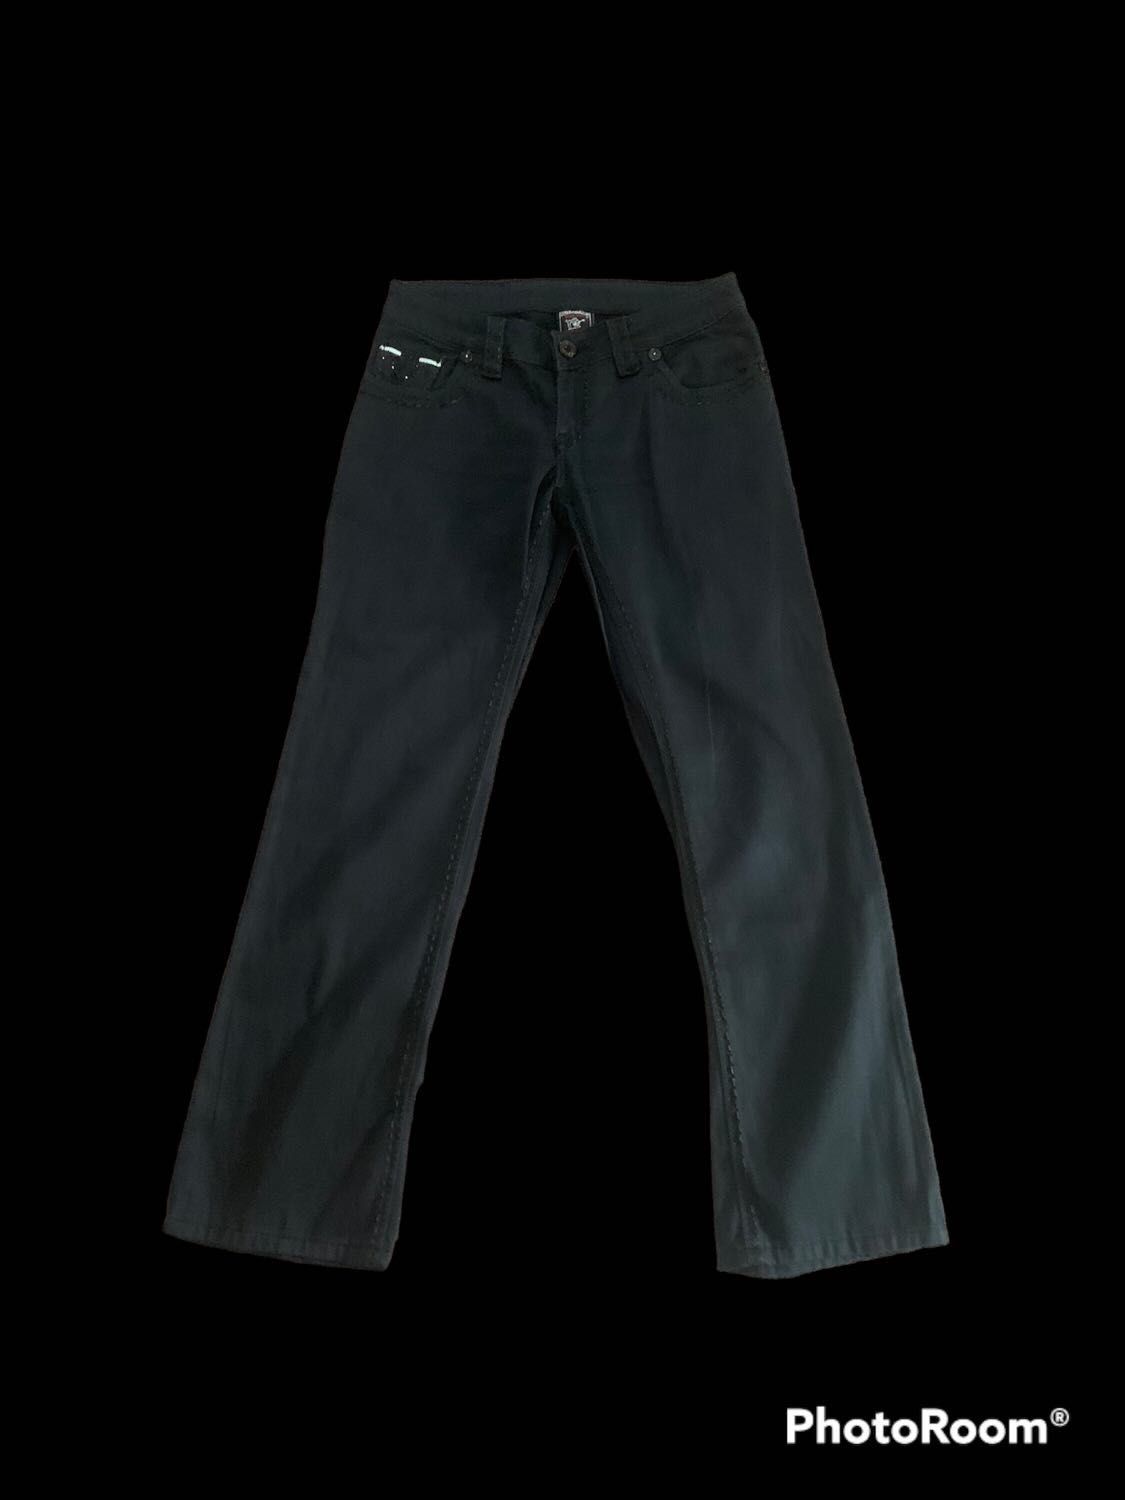 True religion jeans,max 36,low waist